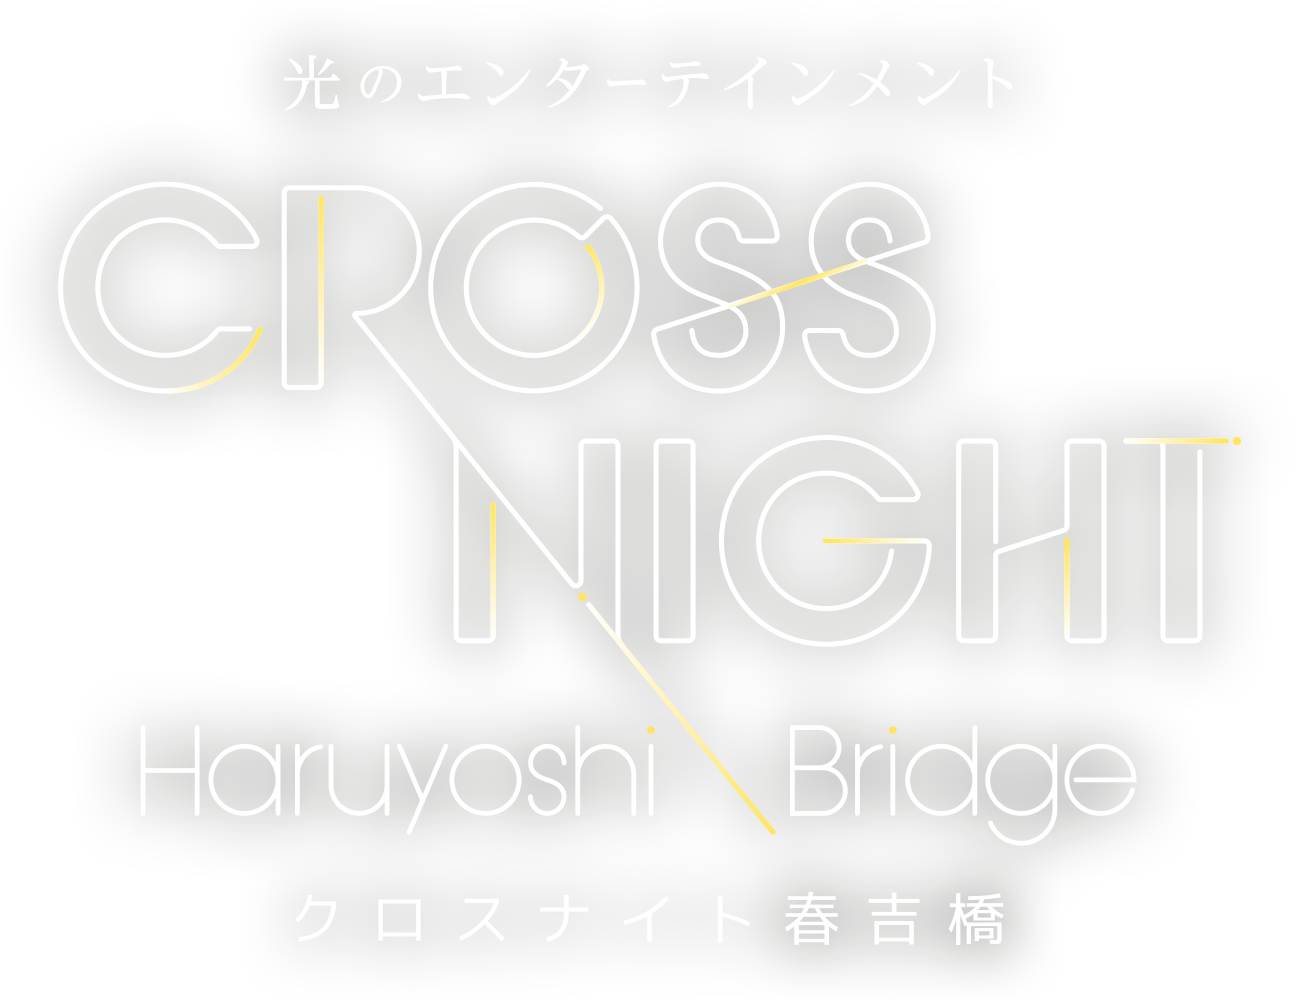 CROSS NIGHT Haruyoshi Bridge